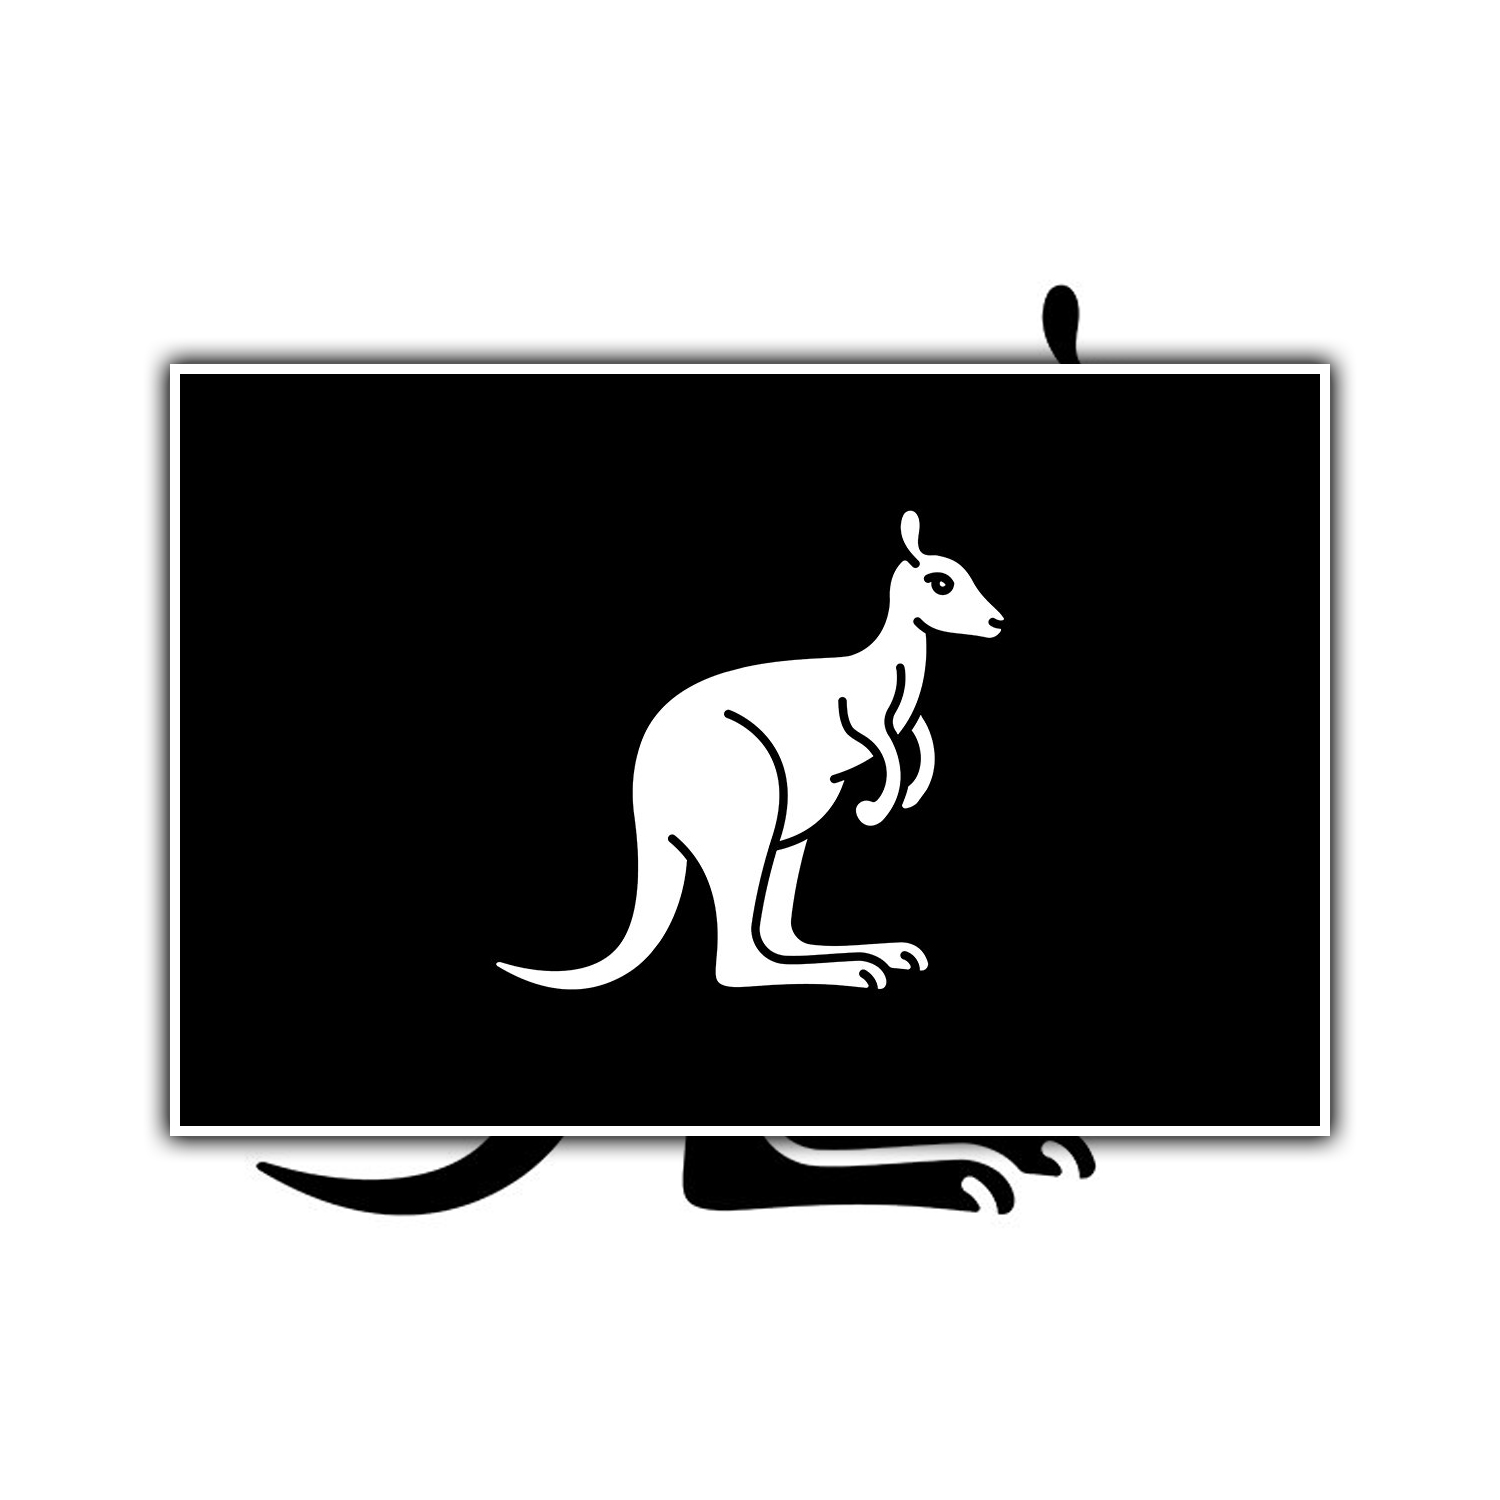 Kangaroo black glyph icon.